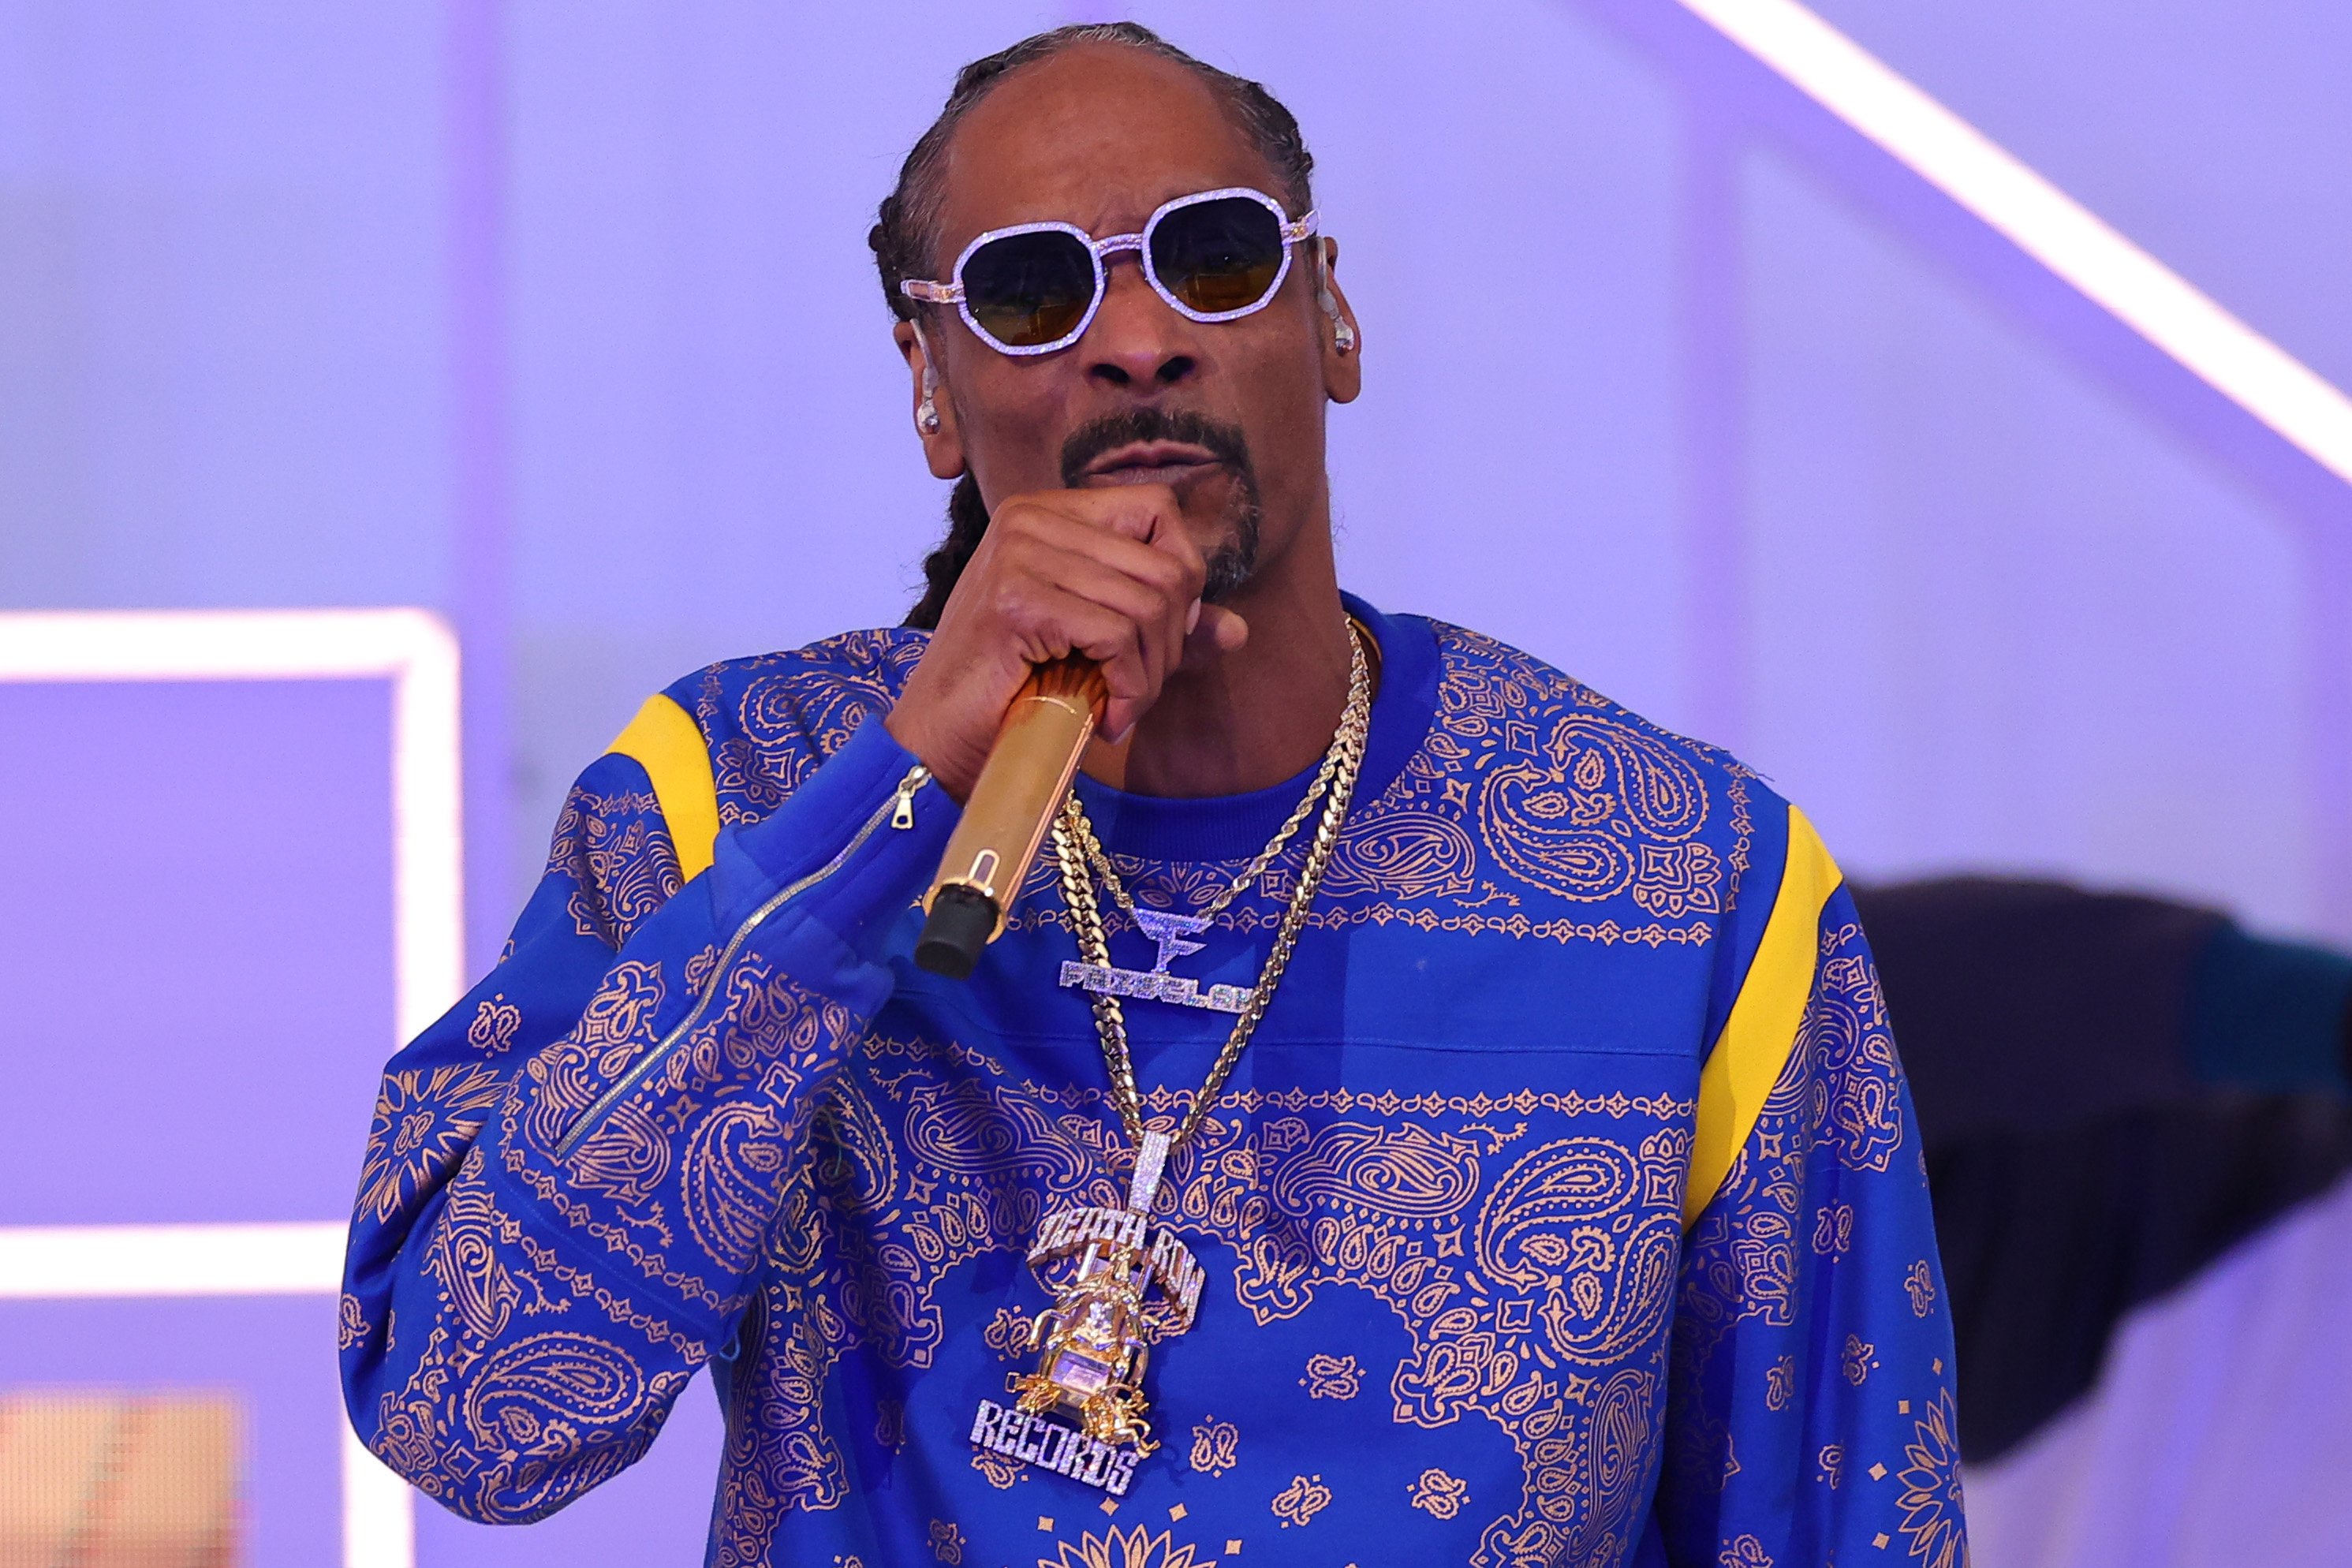 Snoop Dogg wearing blue